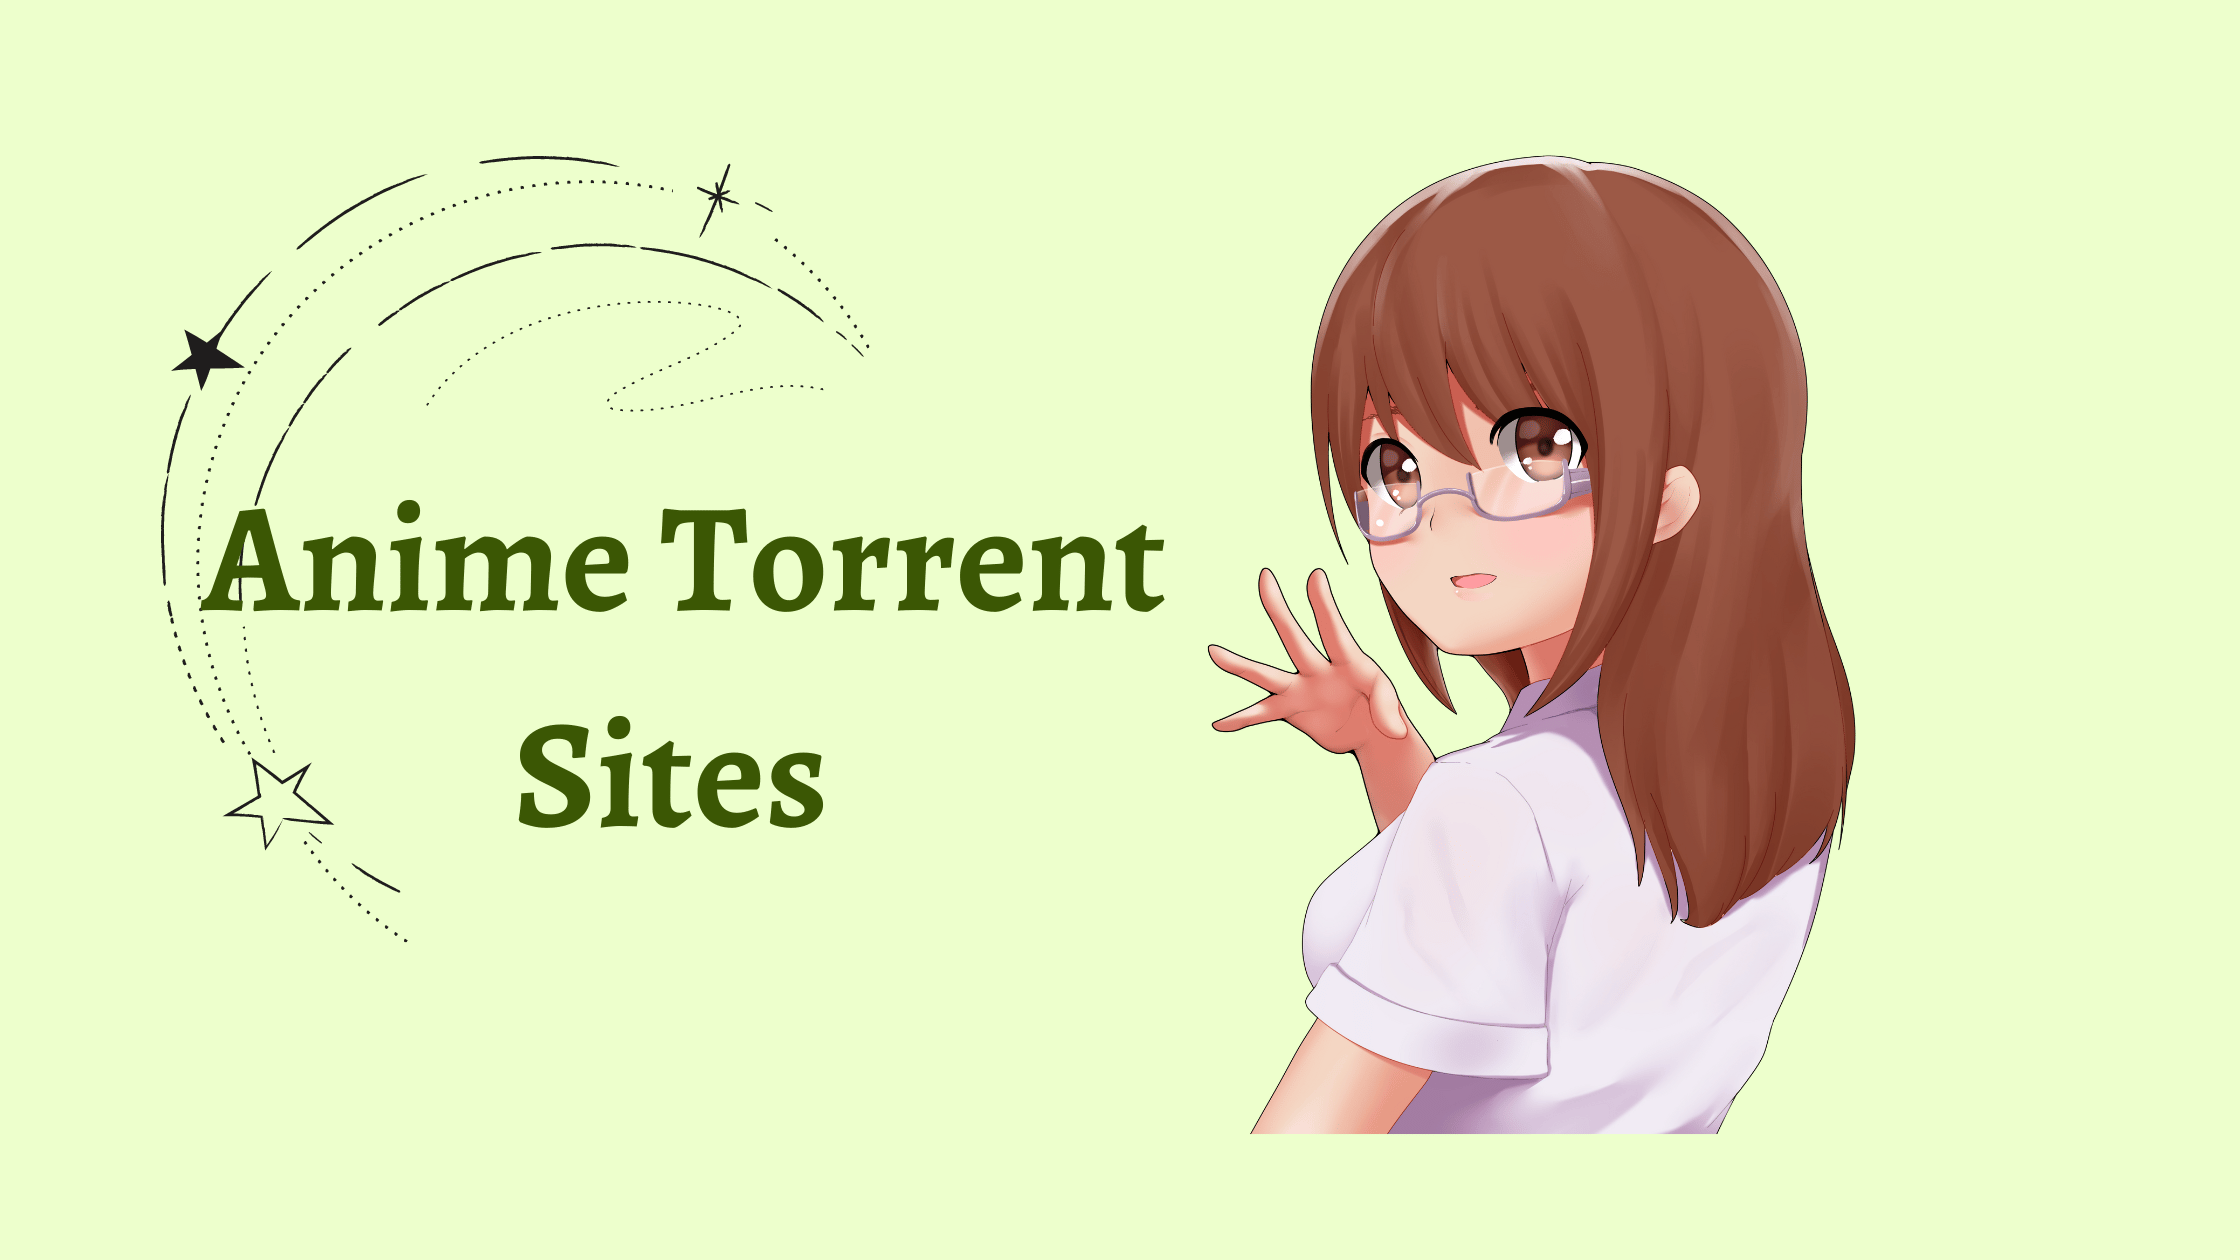 Anime torrenting sites